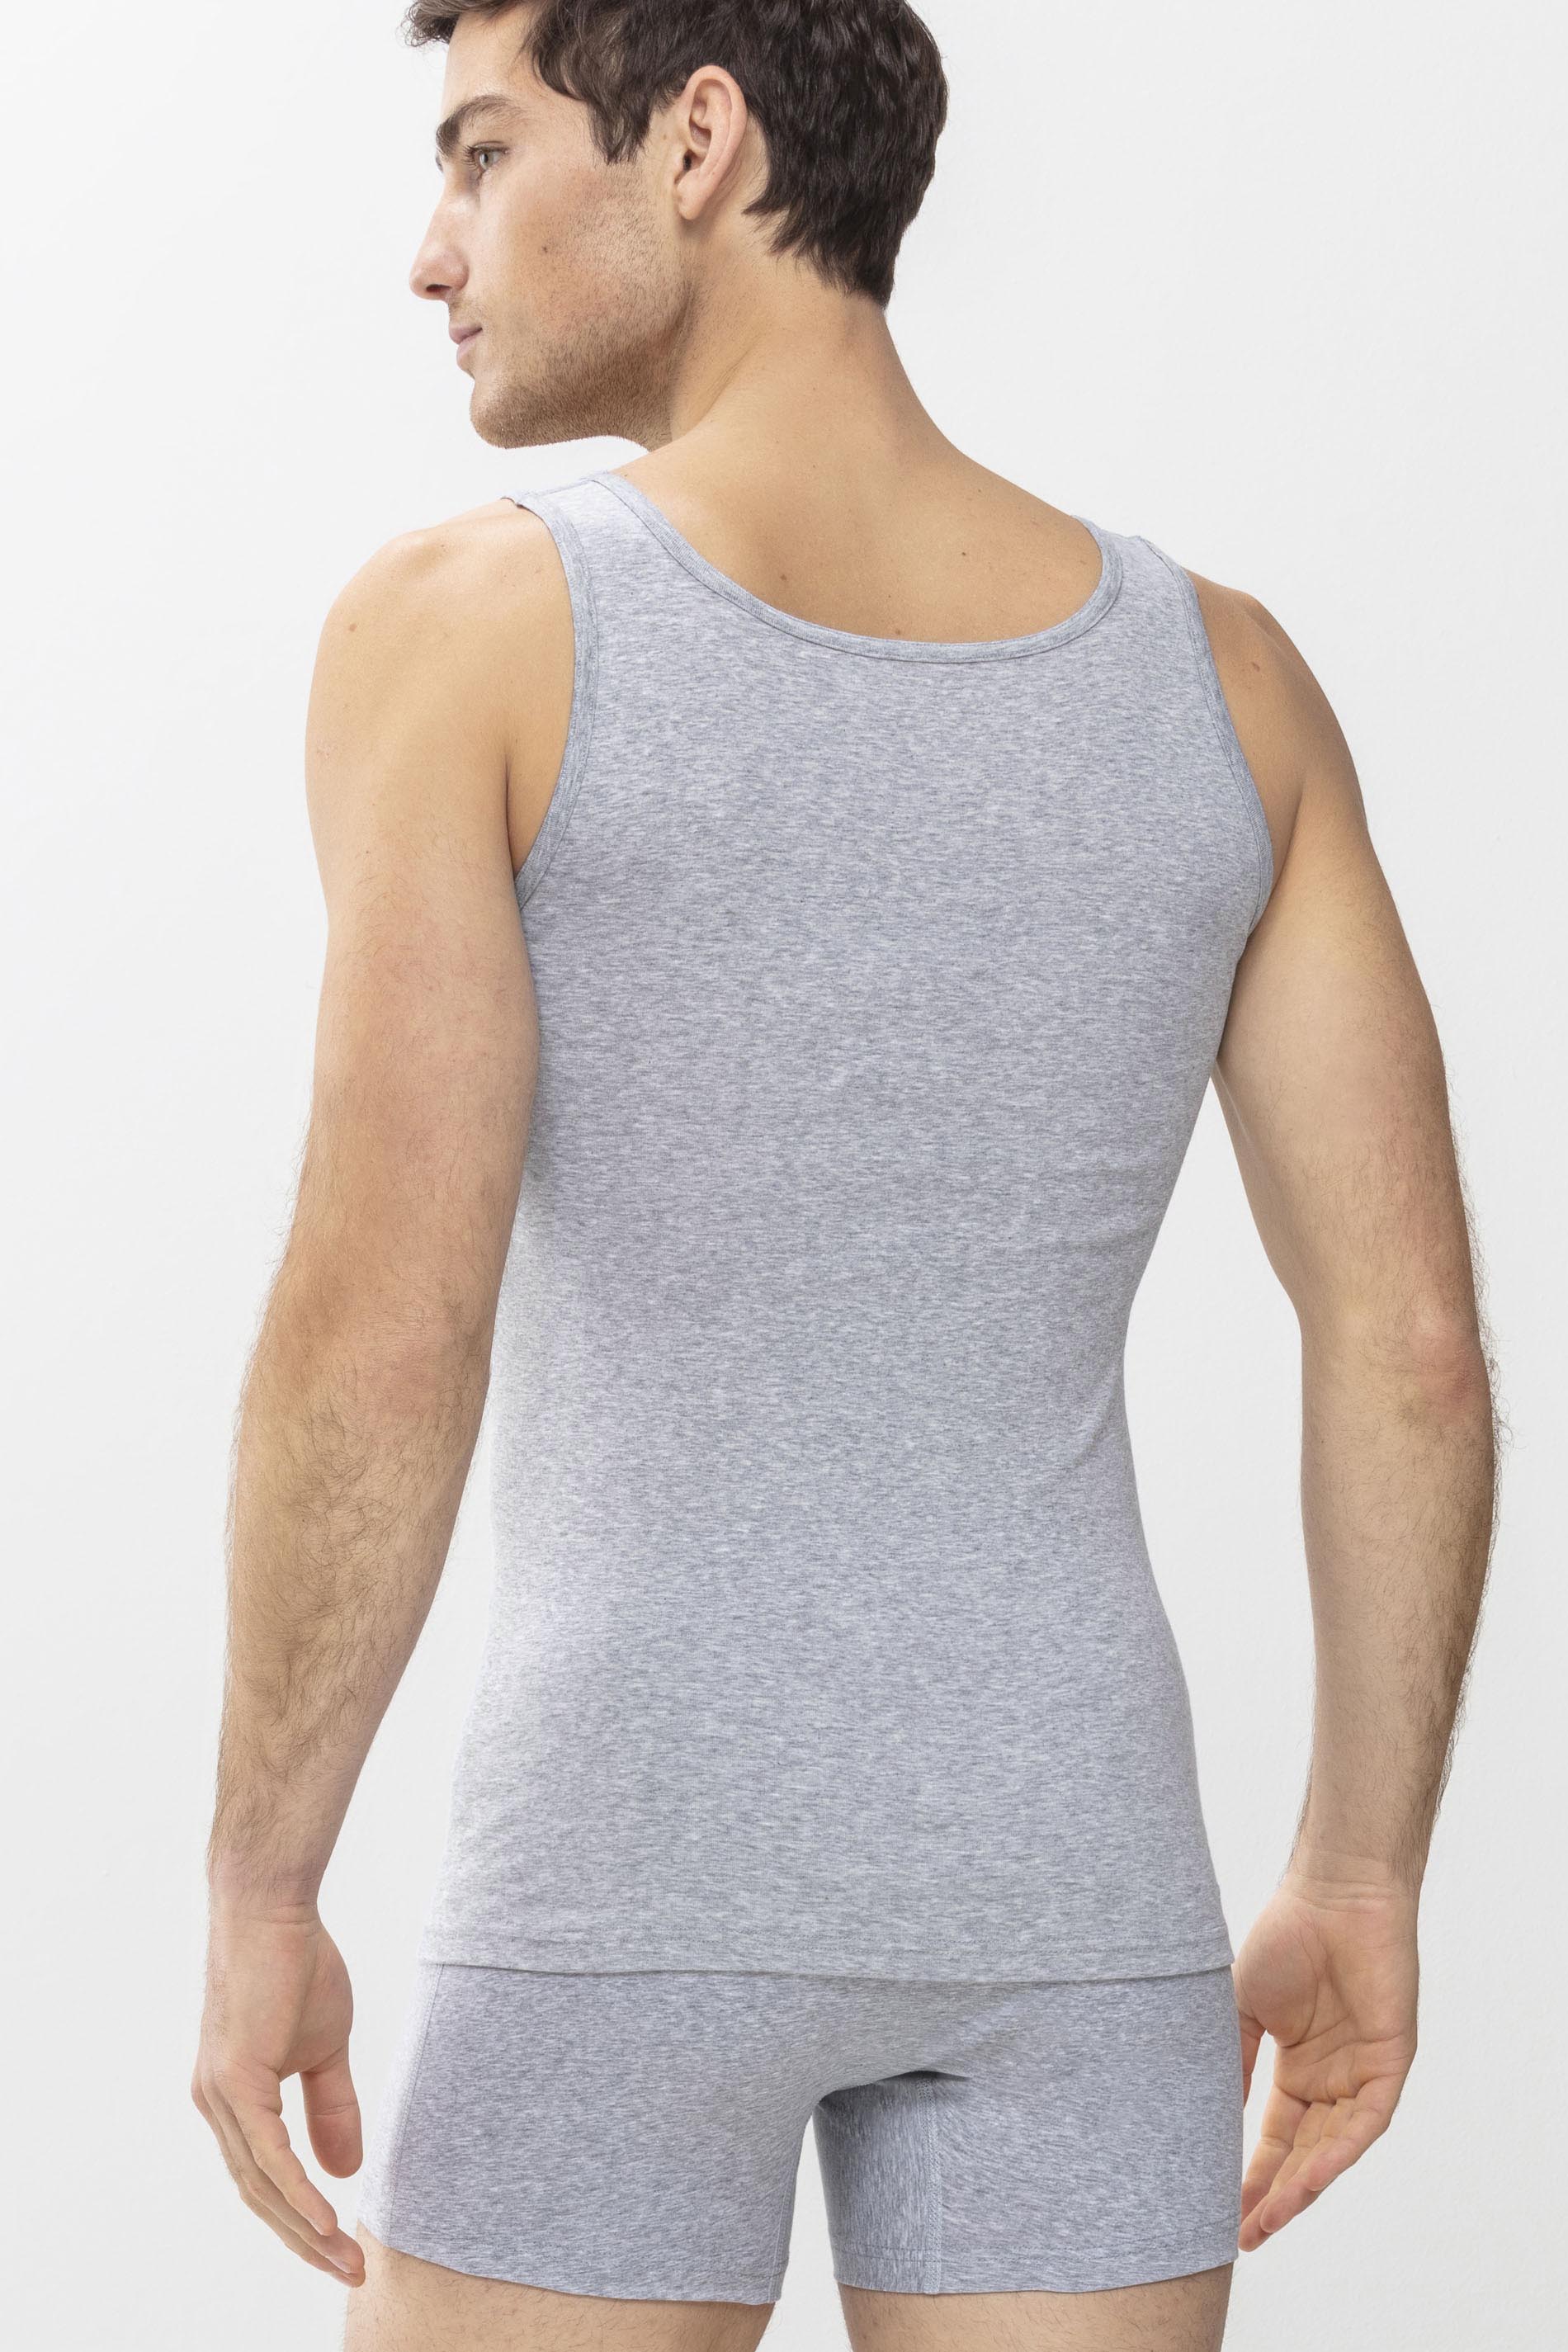 Athletic-Shirt Light Grey Melange Serie Casual Cotton Rear View | mey®